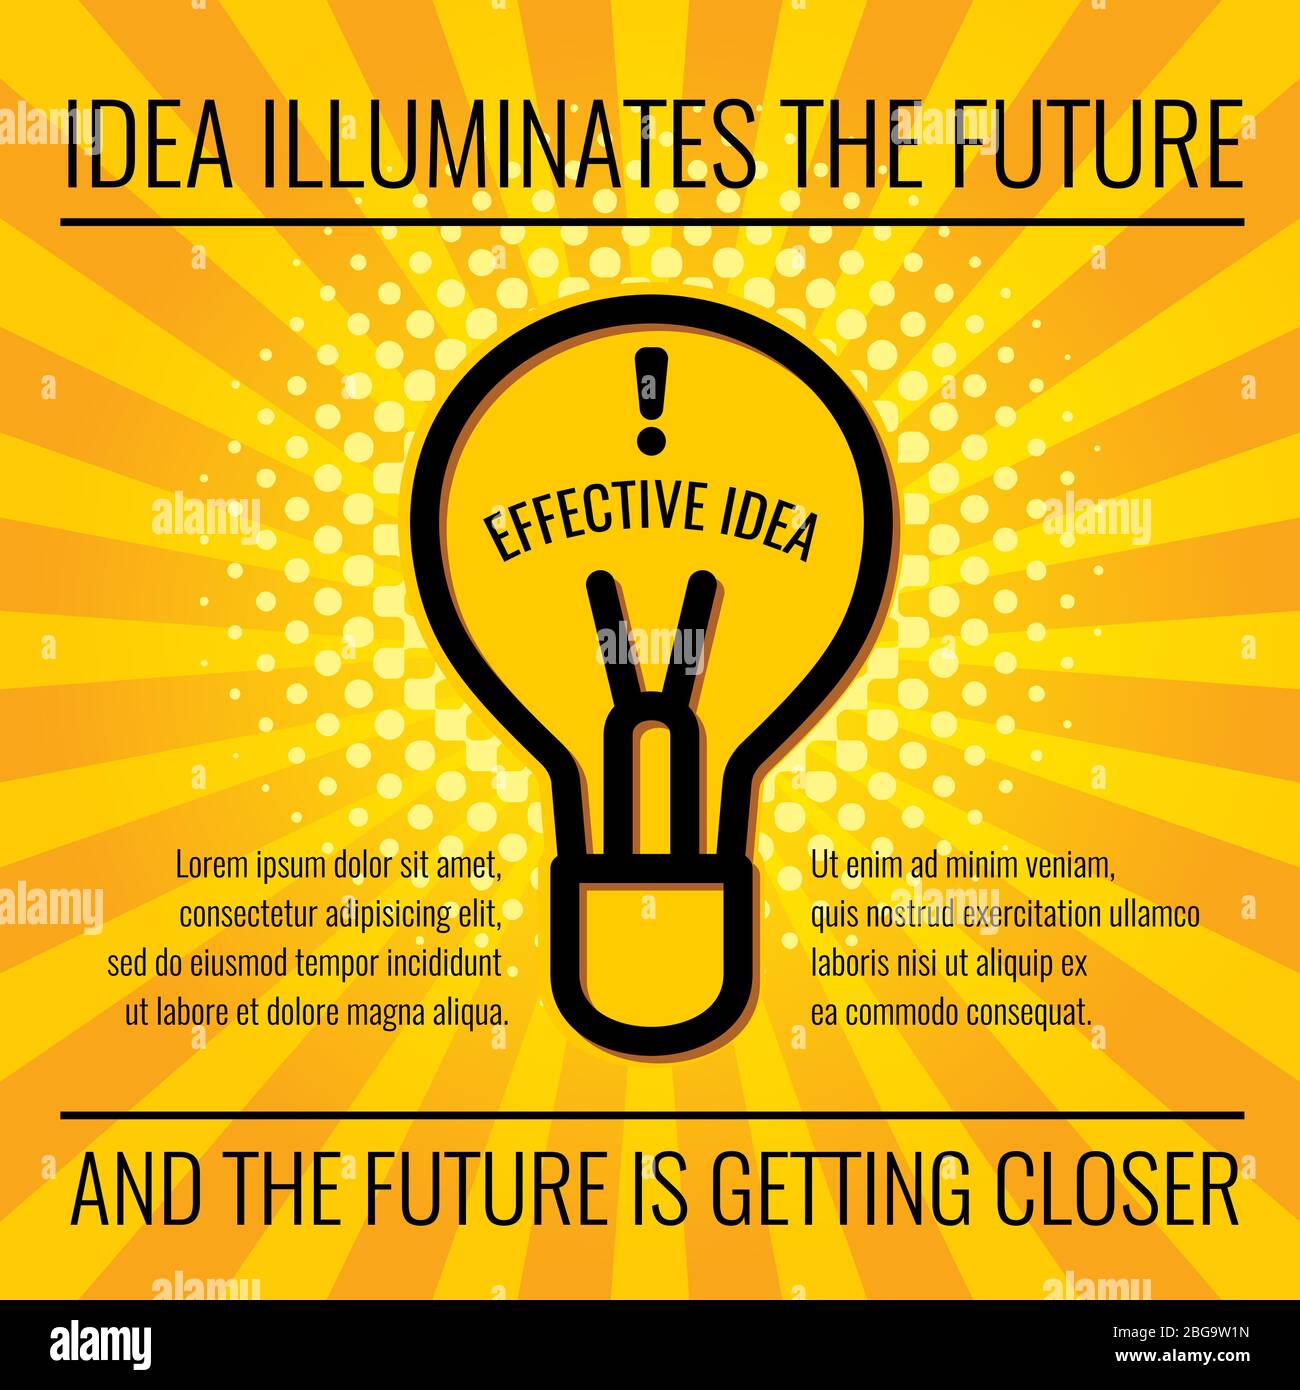 Creative idea vector business concept background. Business idea future illuminate illustration Stock Vector